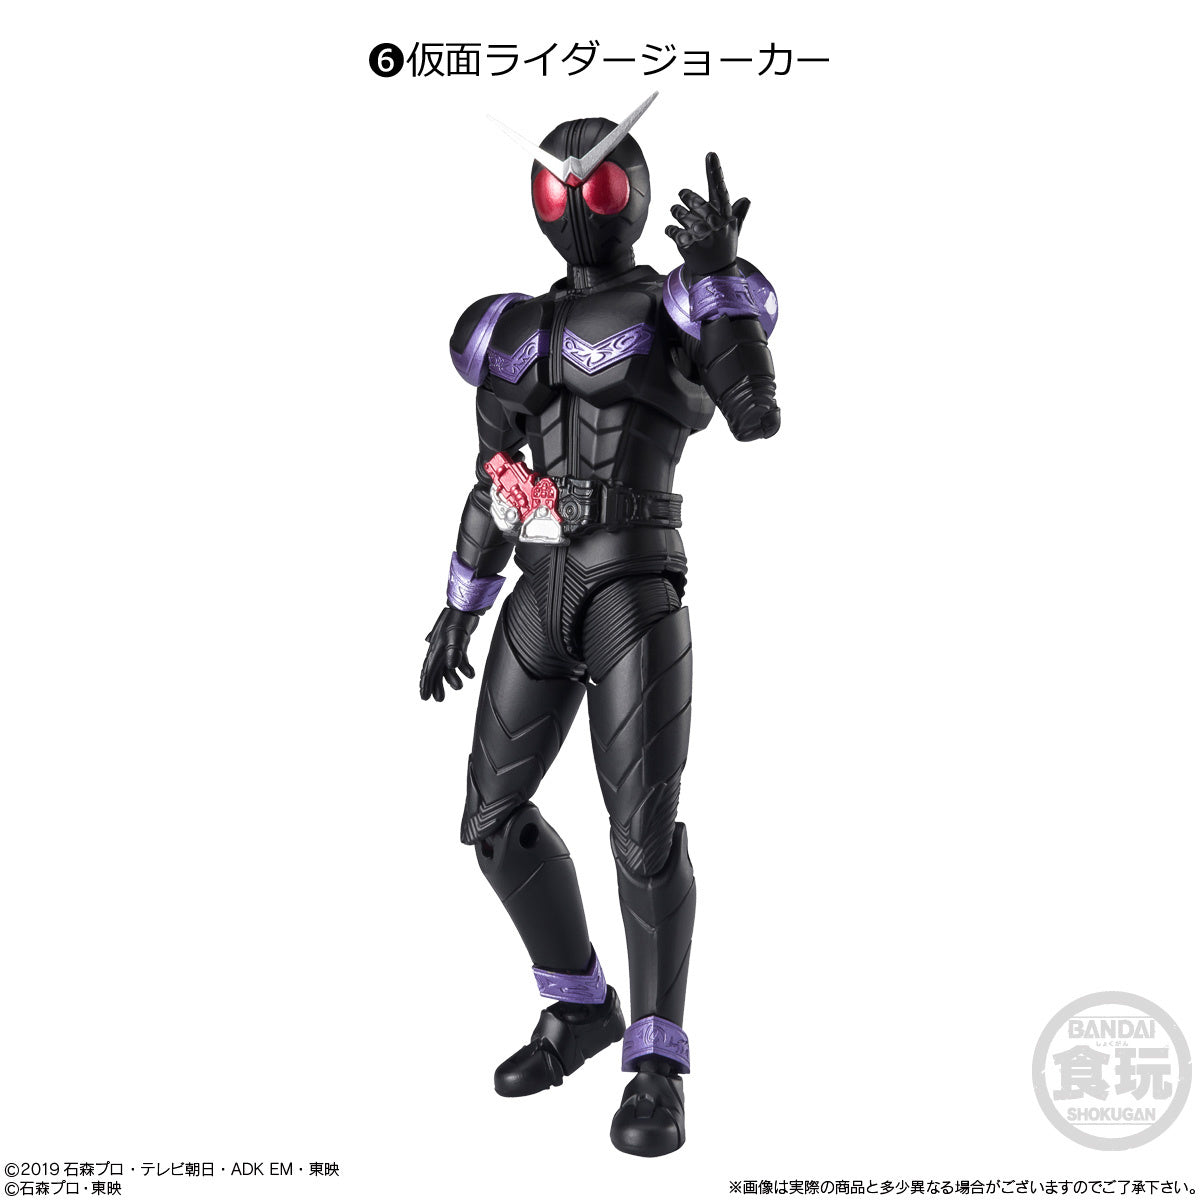 Bandai - Shokugan - Shodo-XX - Masked Rider 4 (Box of 10)